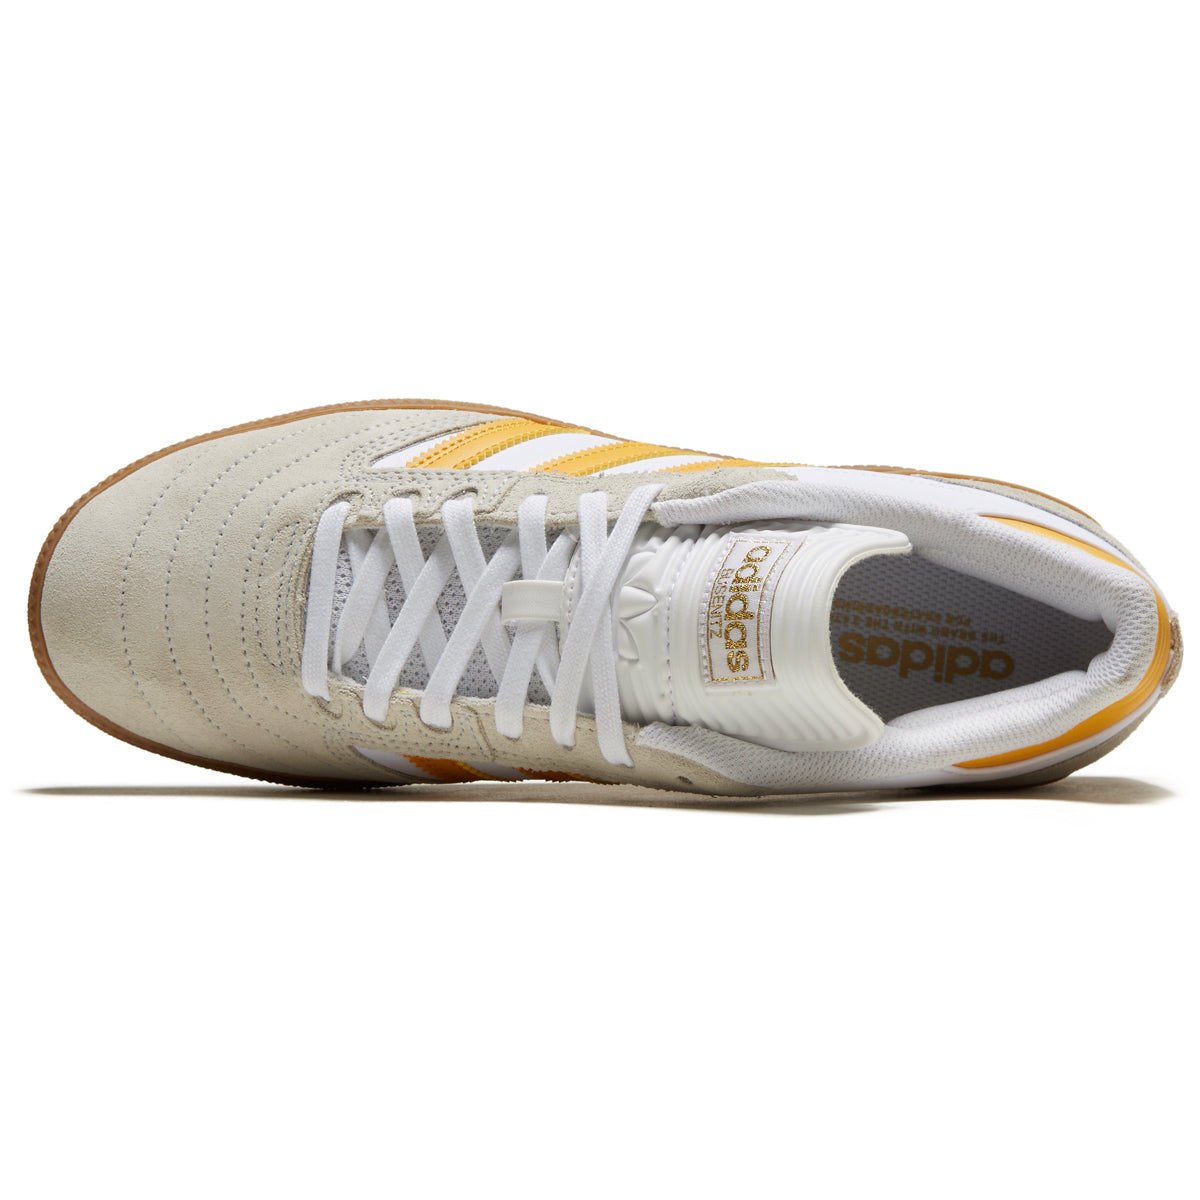 Adidas Busenitz Shoes - Crystal White/Preloved Yellow/Gum4 image 3